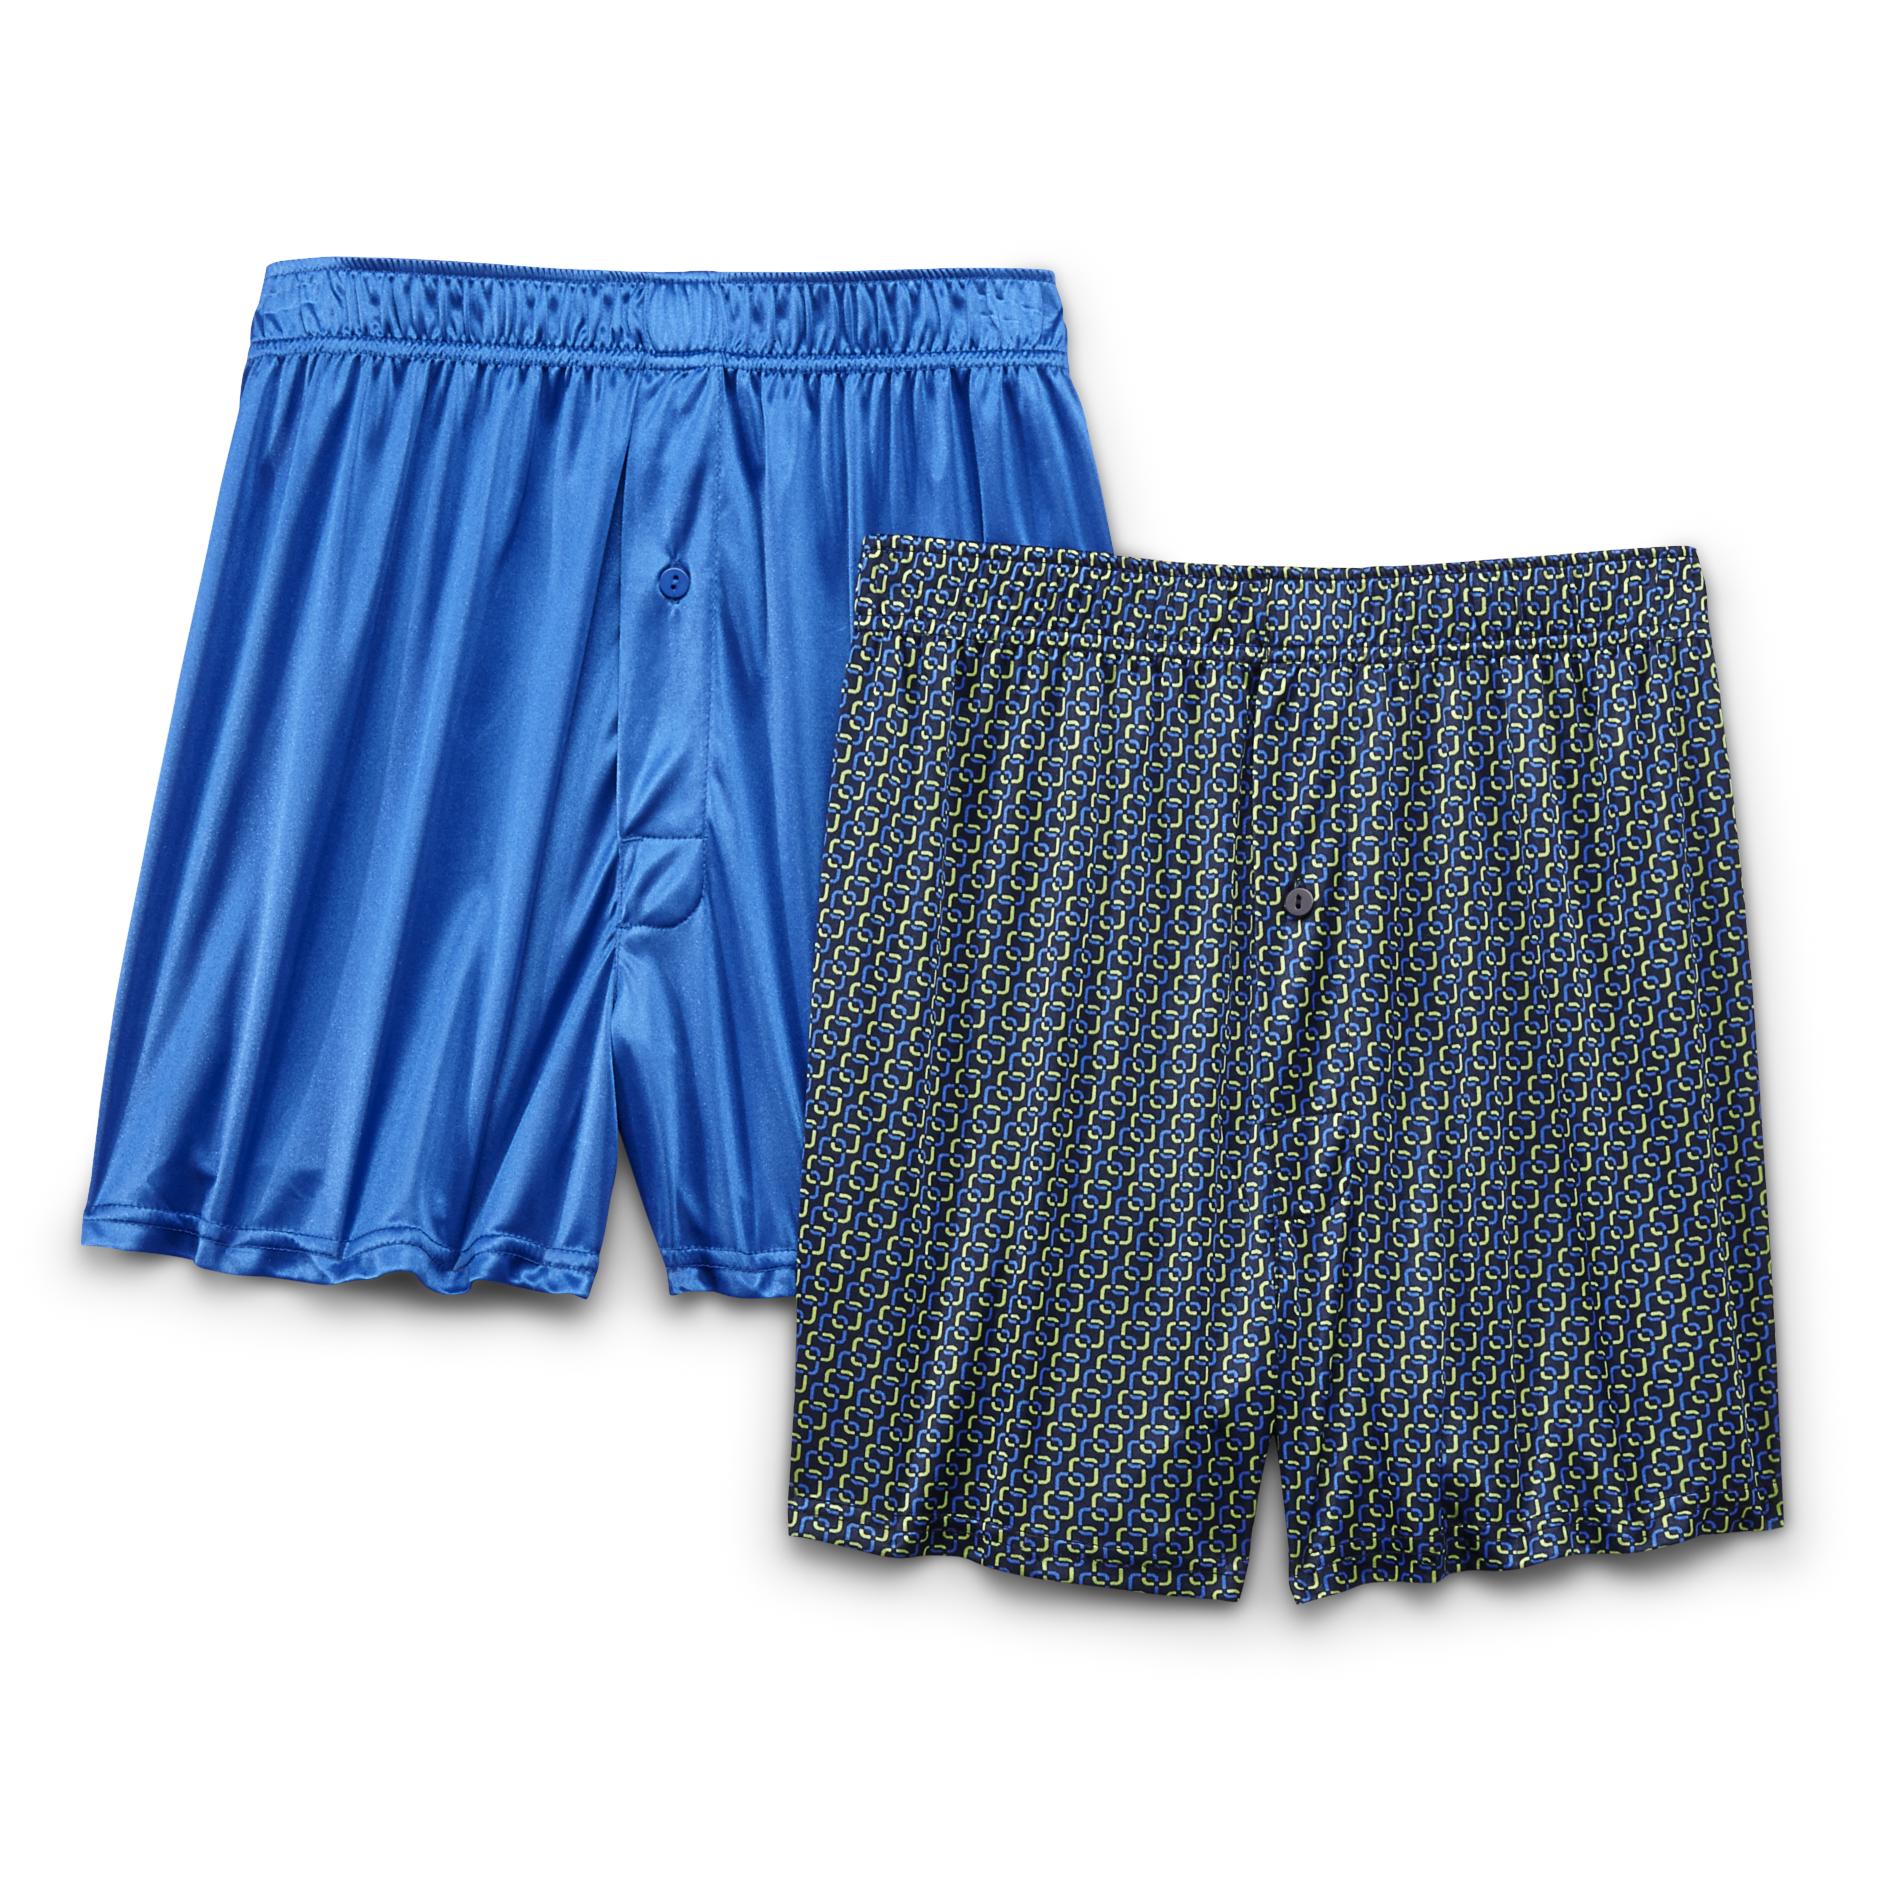 Covington Men's 2-Pack Micro-Knit Boxers - Square Links